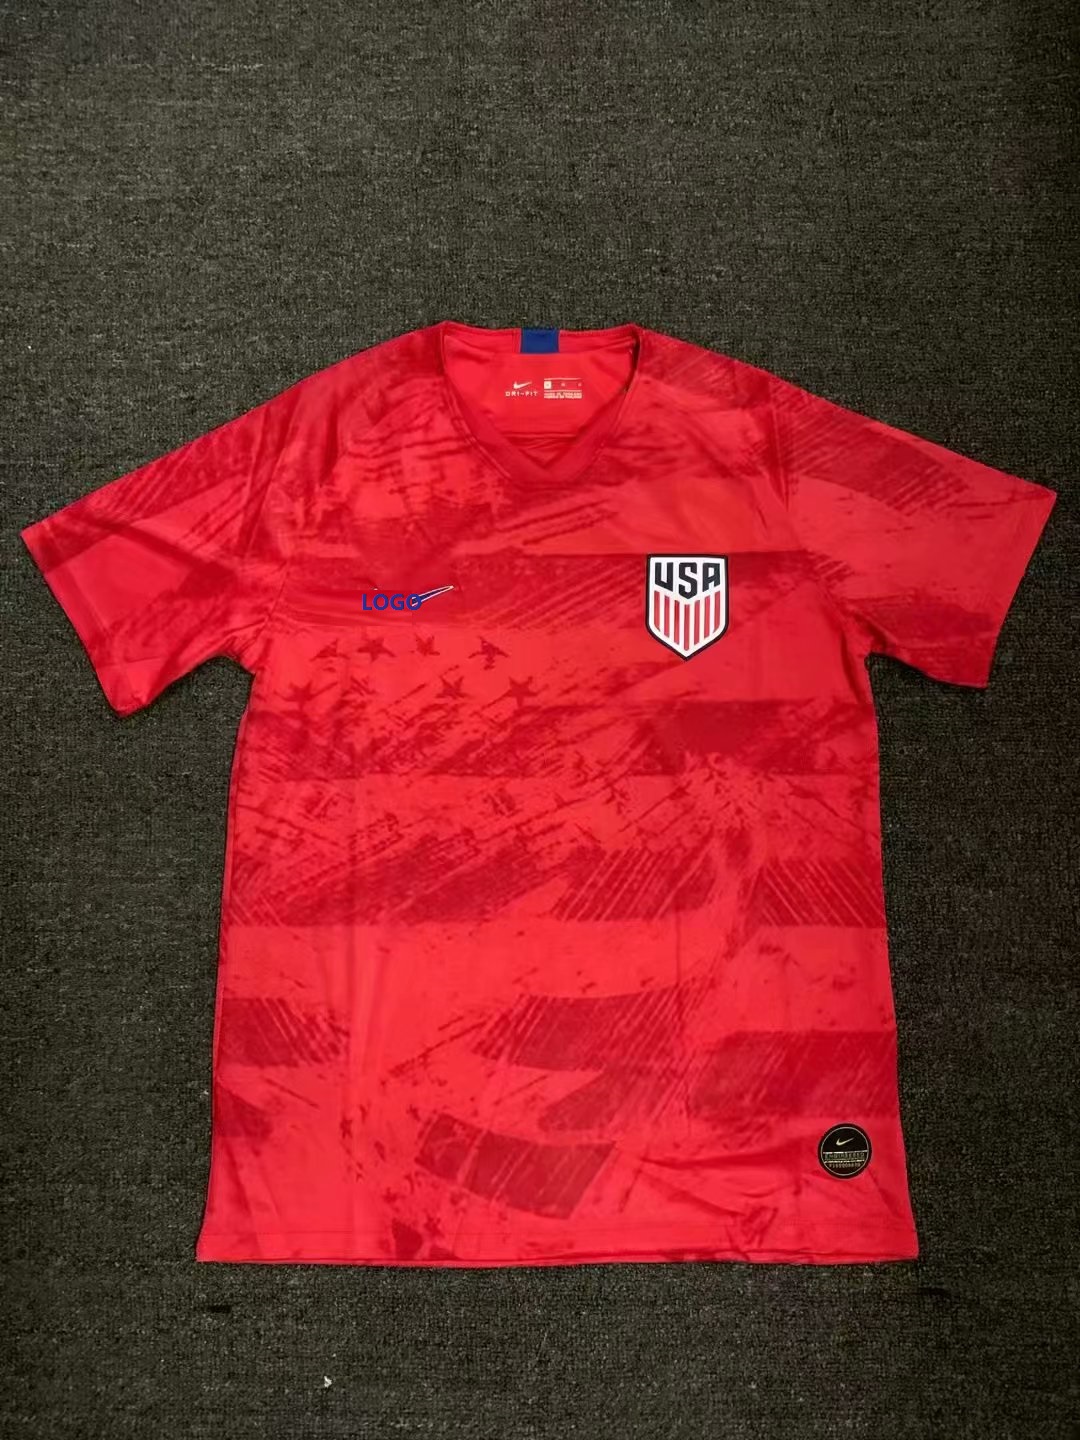 2019 men's usa soccer jersey